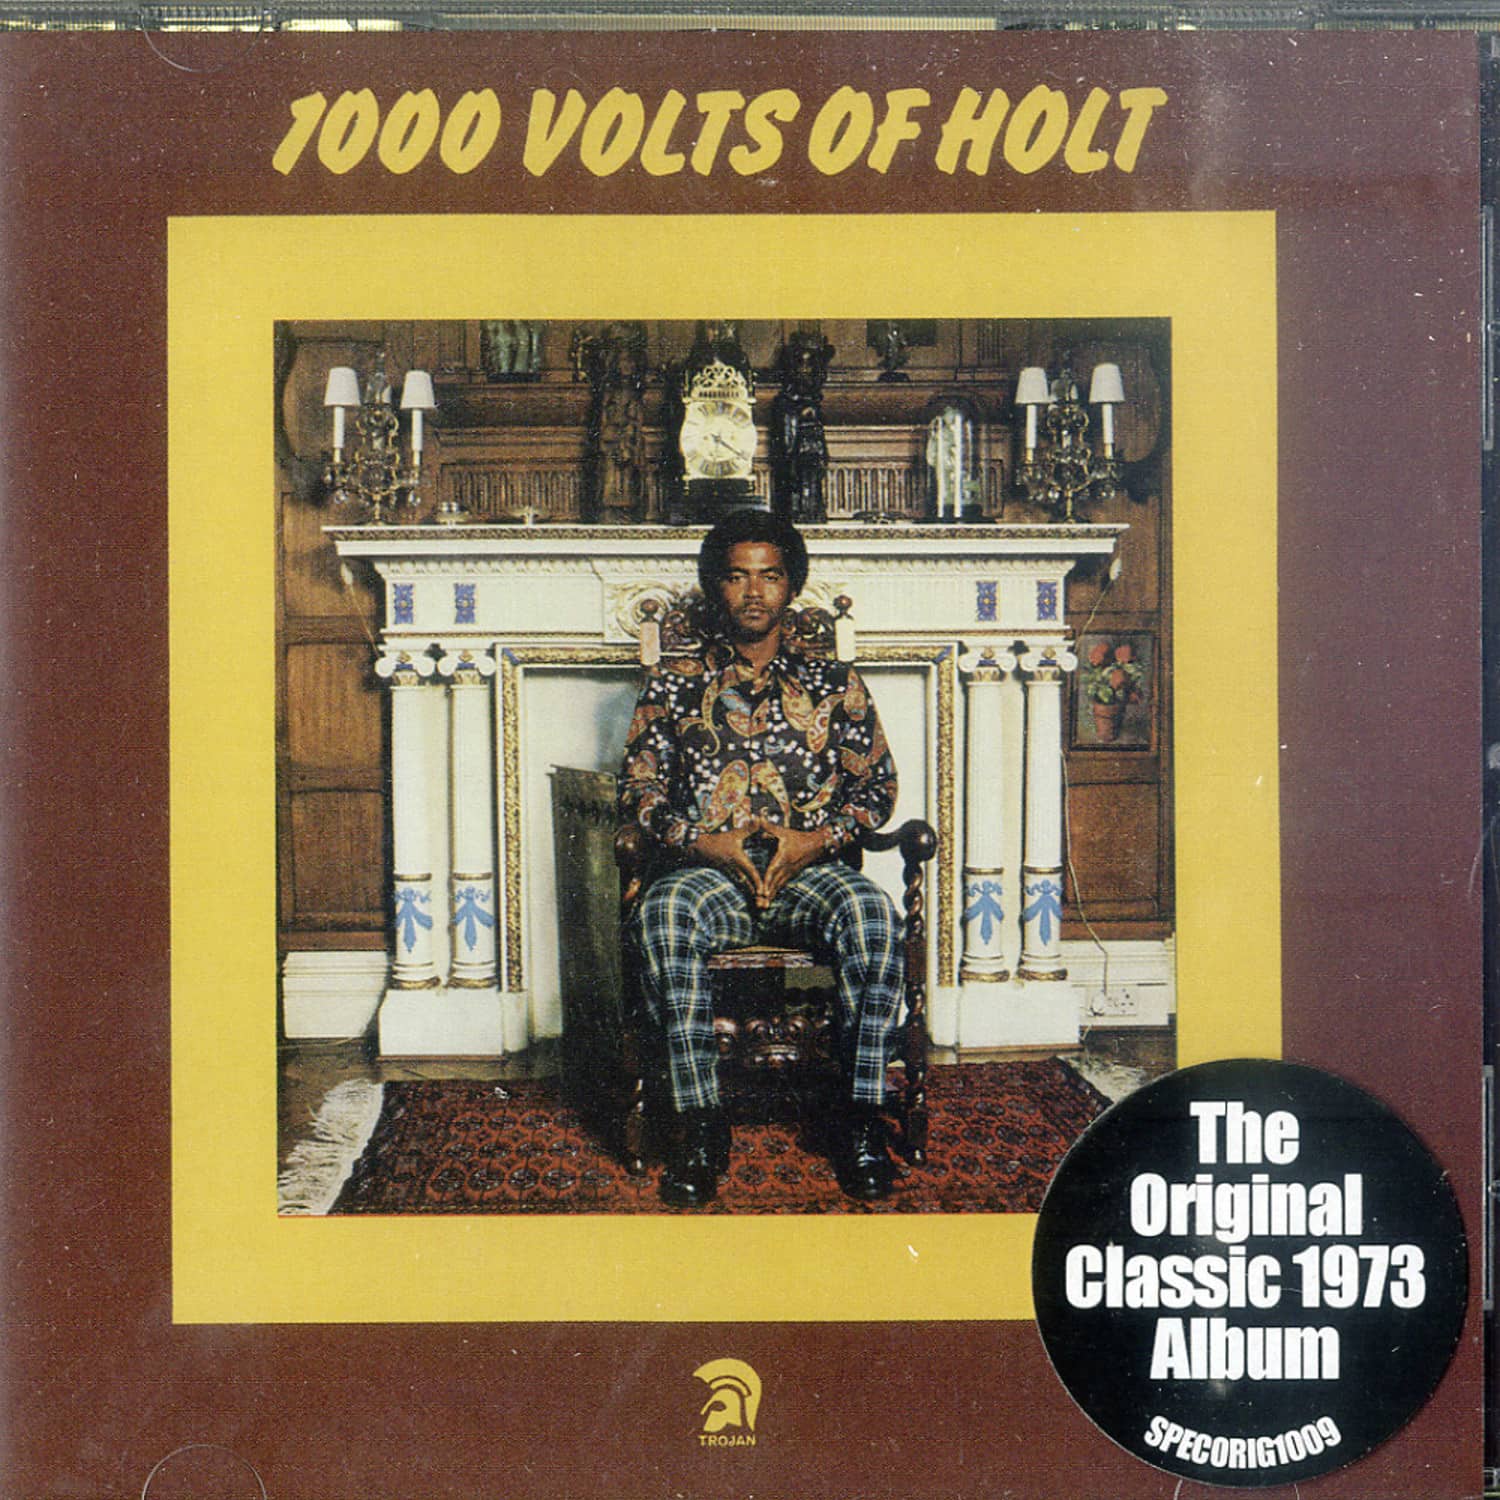 John Holt - 1000 VOLTS OF HOLT 